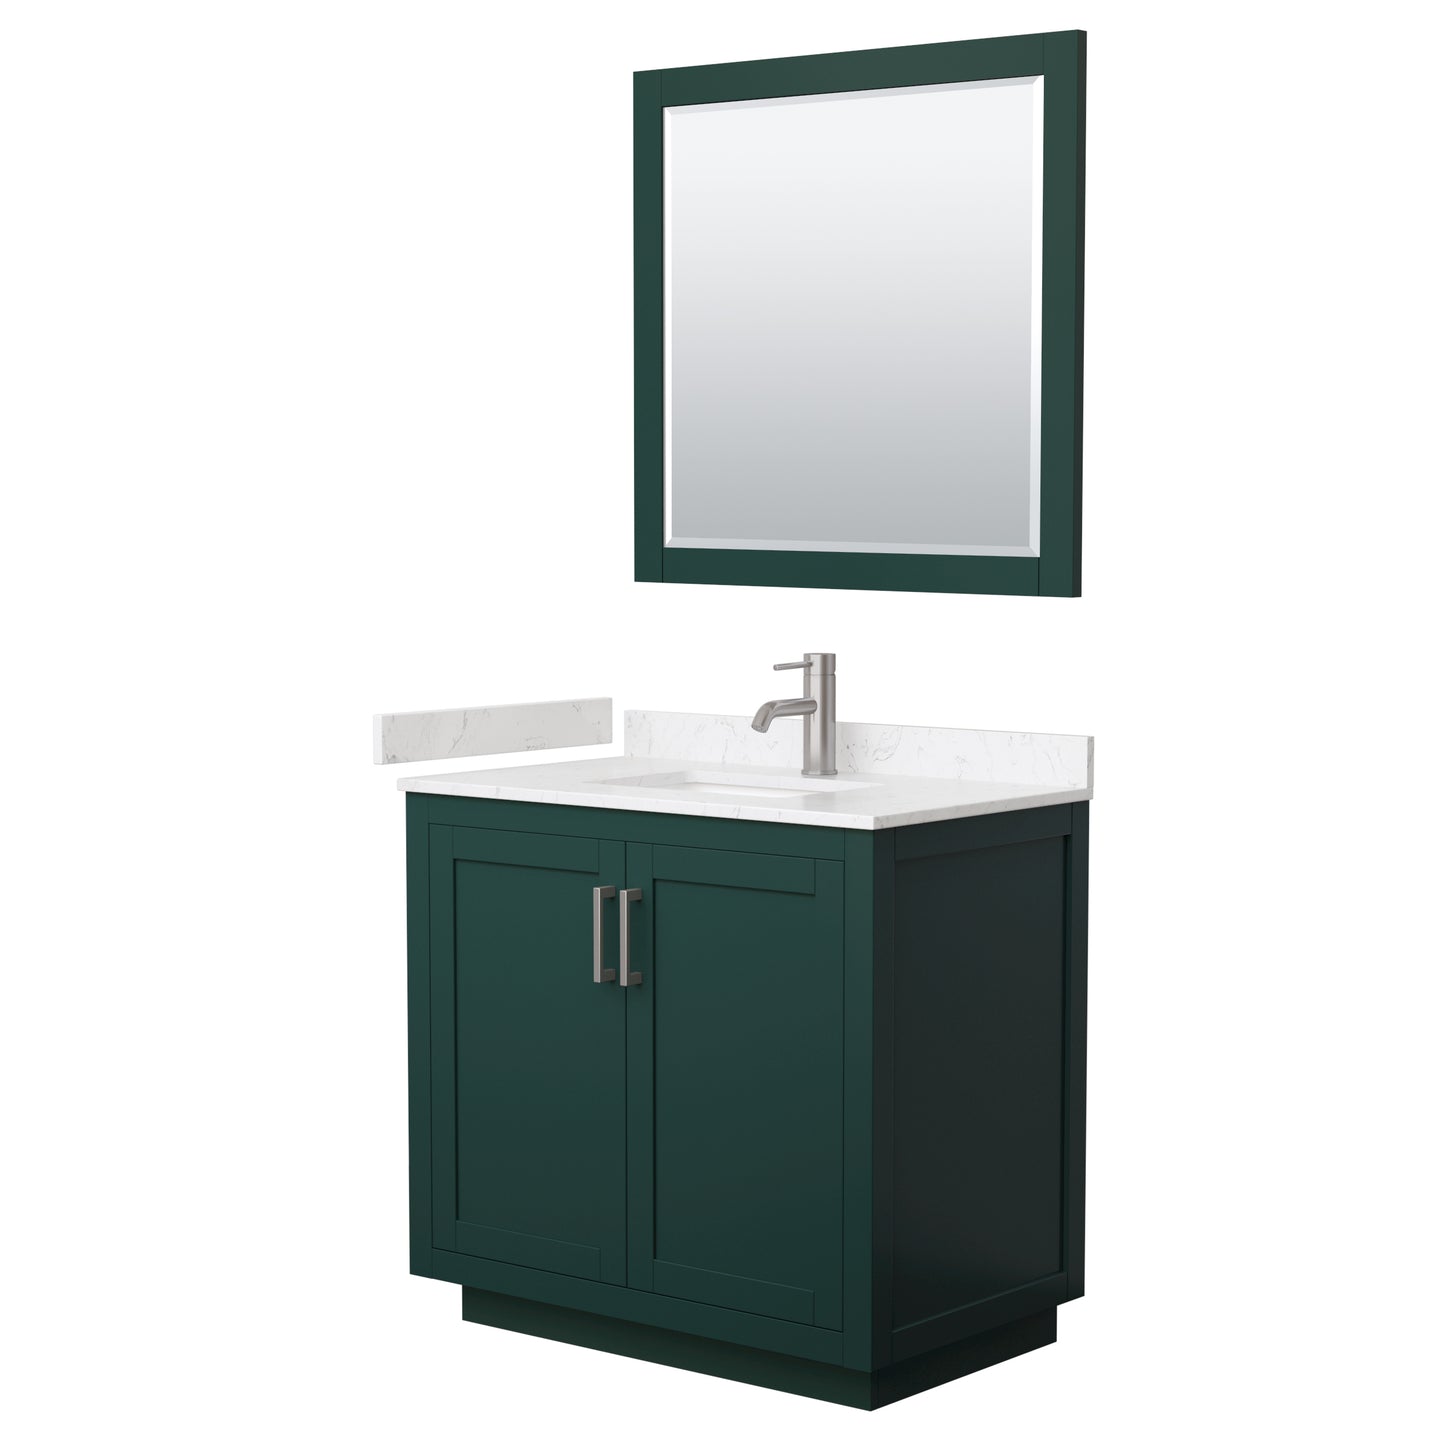 Wyndham Miranda 36 Inch Single Bathroom Vanity in Green with Light-Vein Carrara Cultured Marble Countertop Undermount Square Sink and Trim - Luxe Bathroom Vanities